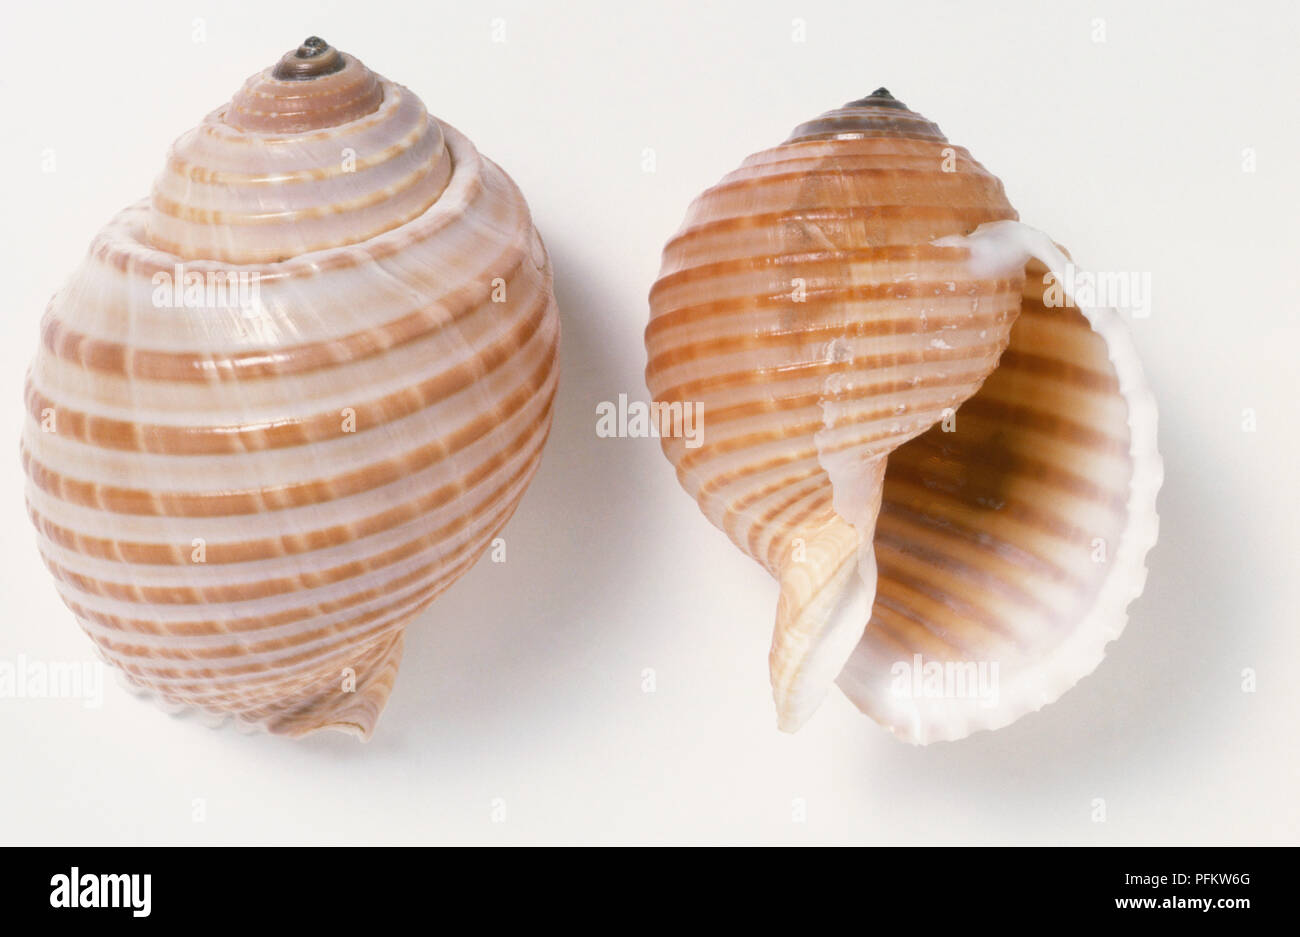 Two Costate Tun shells (Tonna allium), close up Stock Photo - Alamy